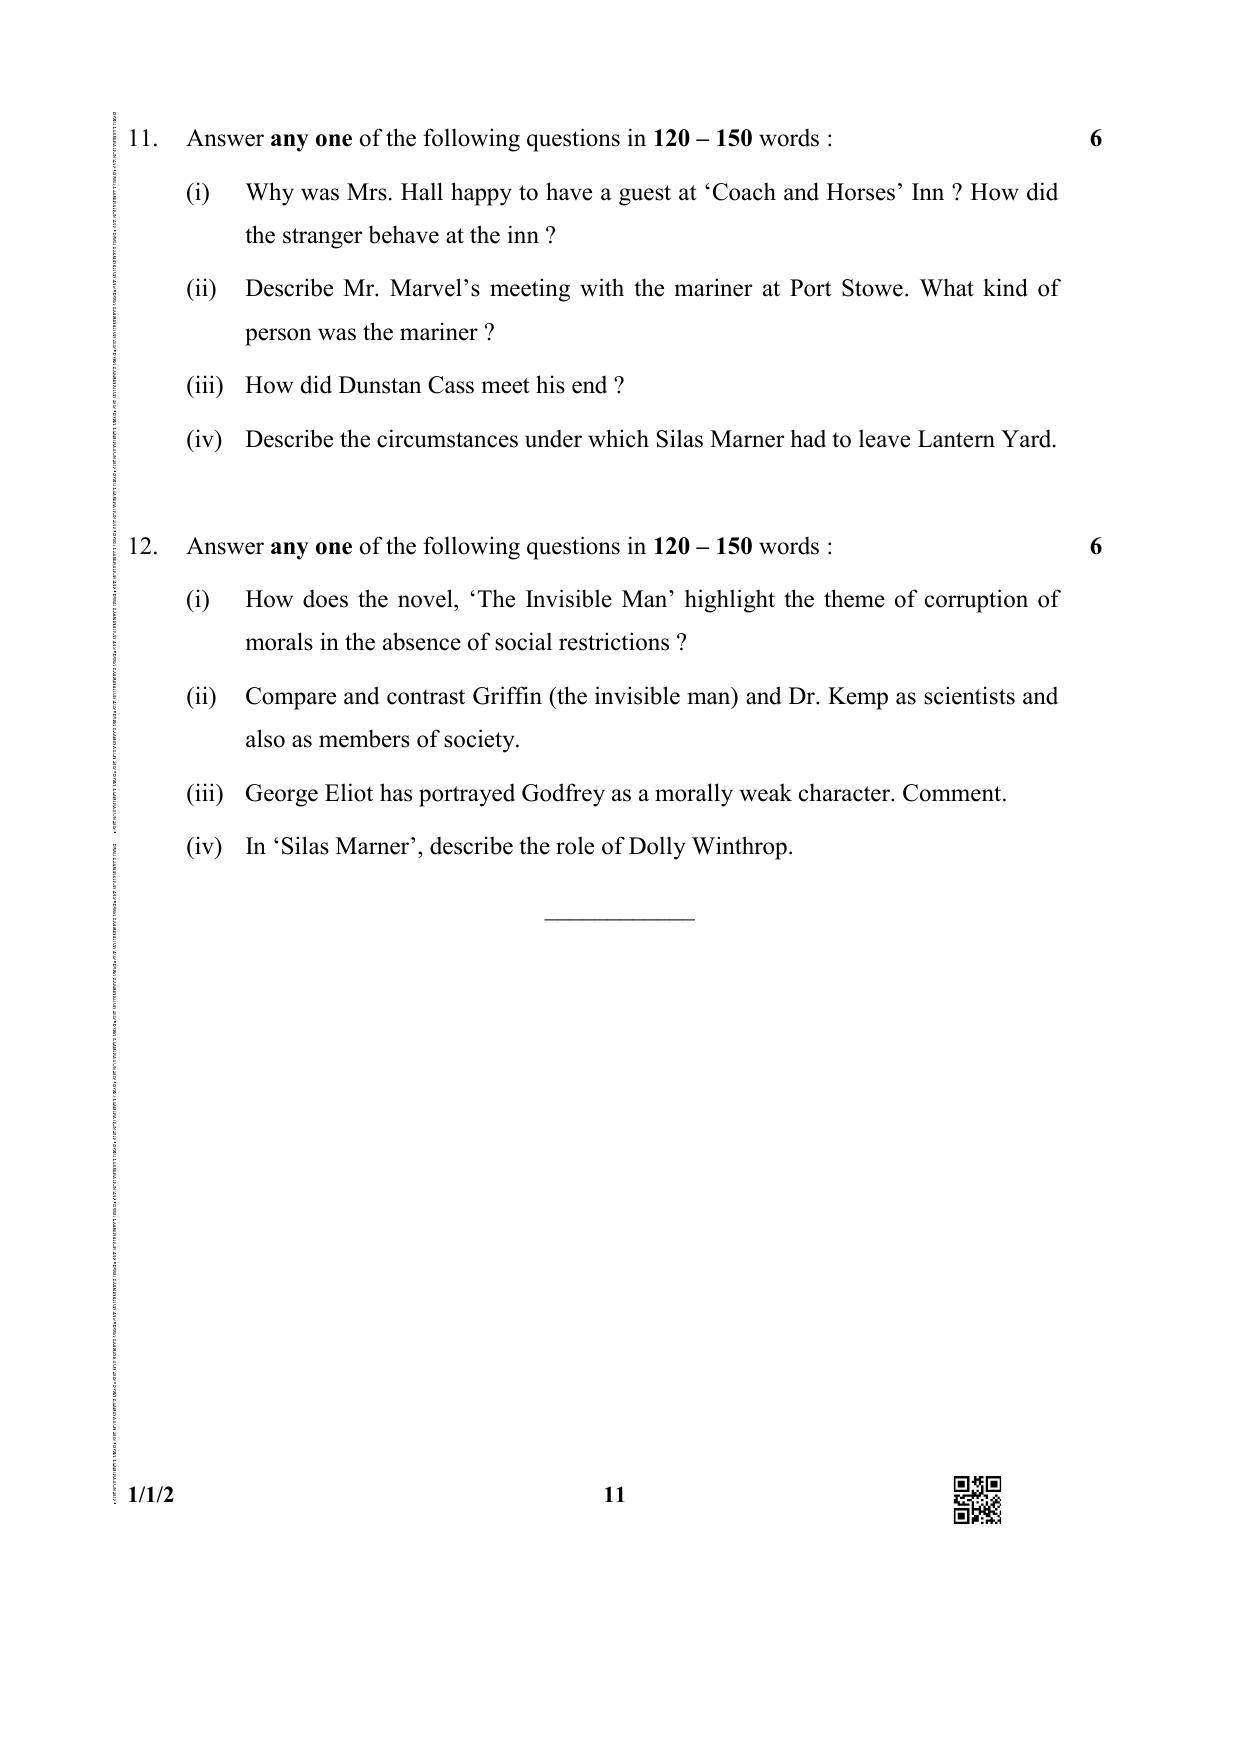 CBSE Class 12 1-1-2 (English Core) 2019 Question Paper - Page 11